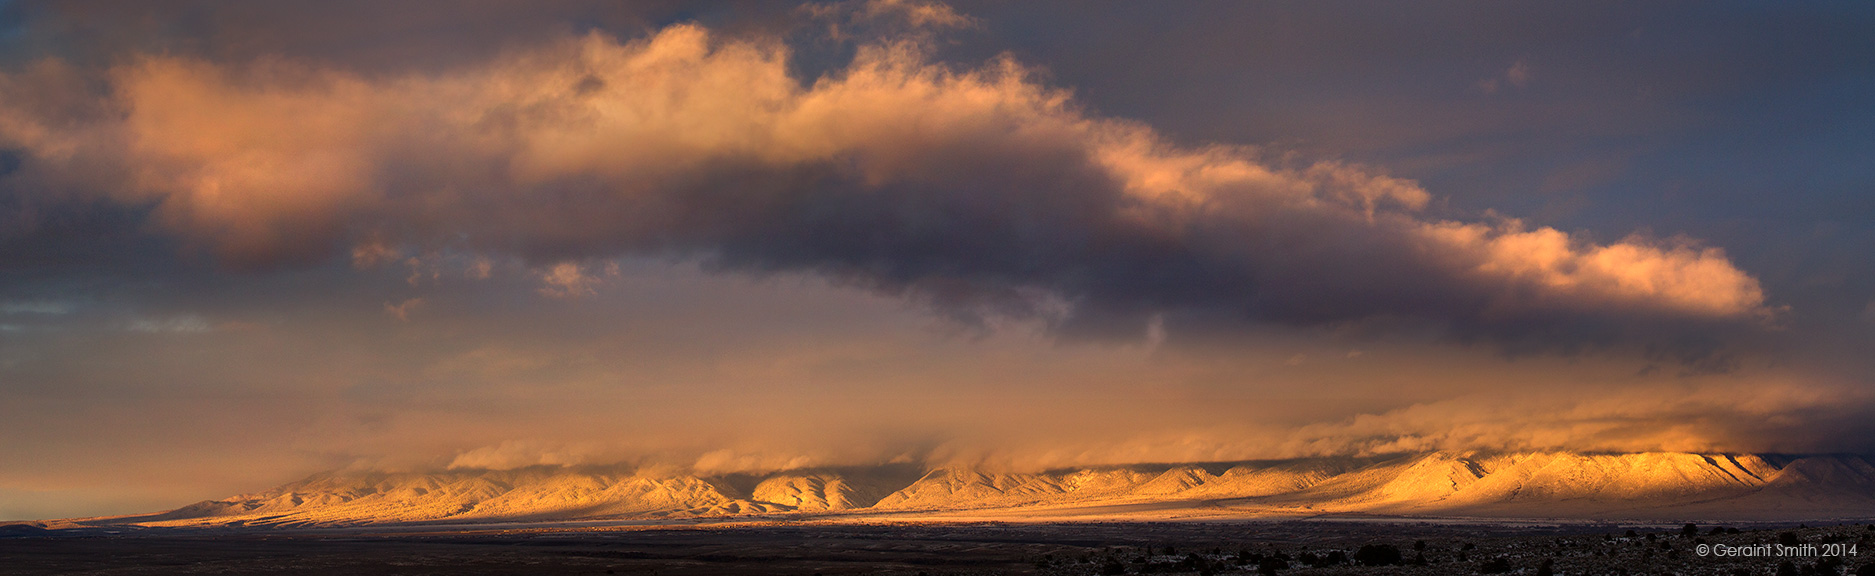 taos mountains sunset mesa sky breaking storm taos valley